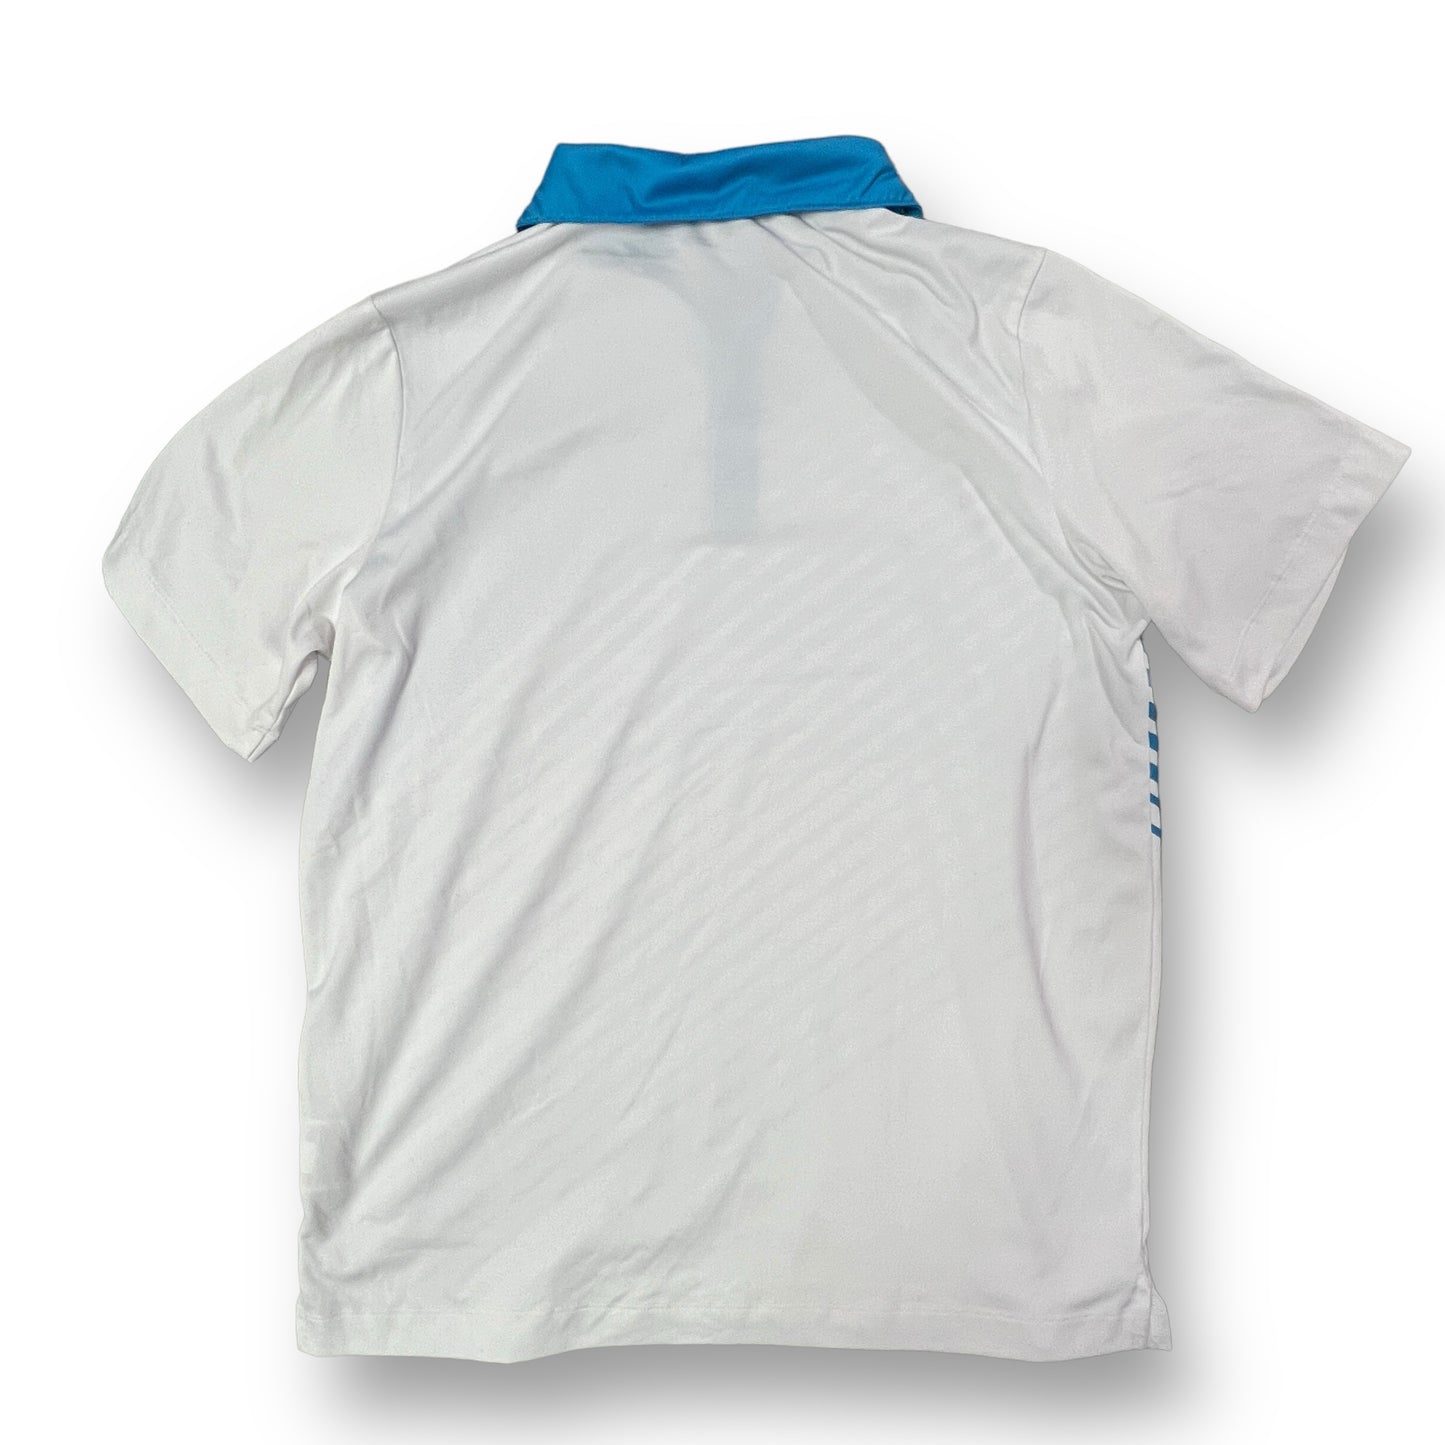 Boys Nike Golf Size 14/16 YXL Blue & White Dri-Fit Performance Polo Shirt